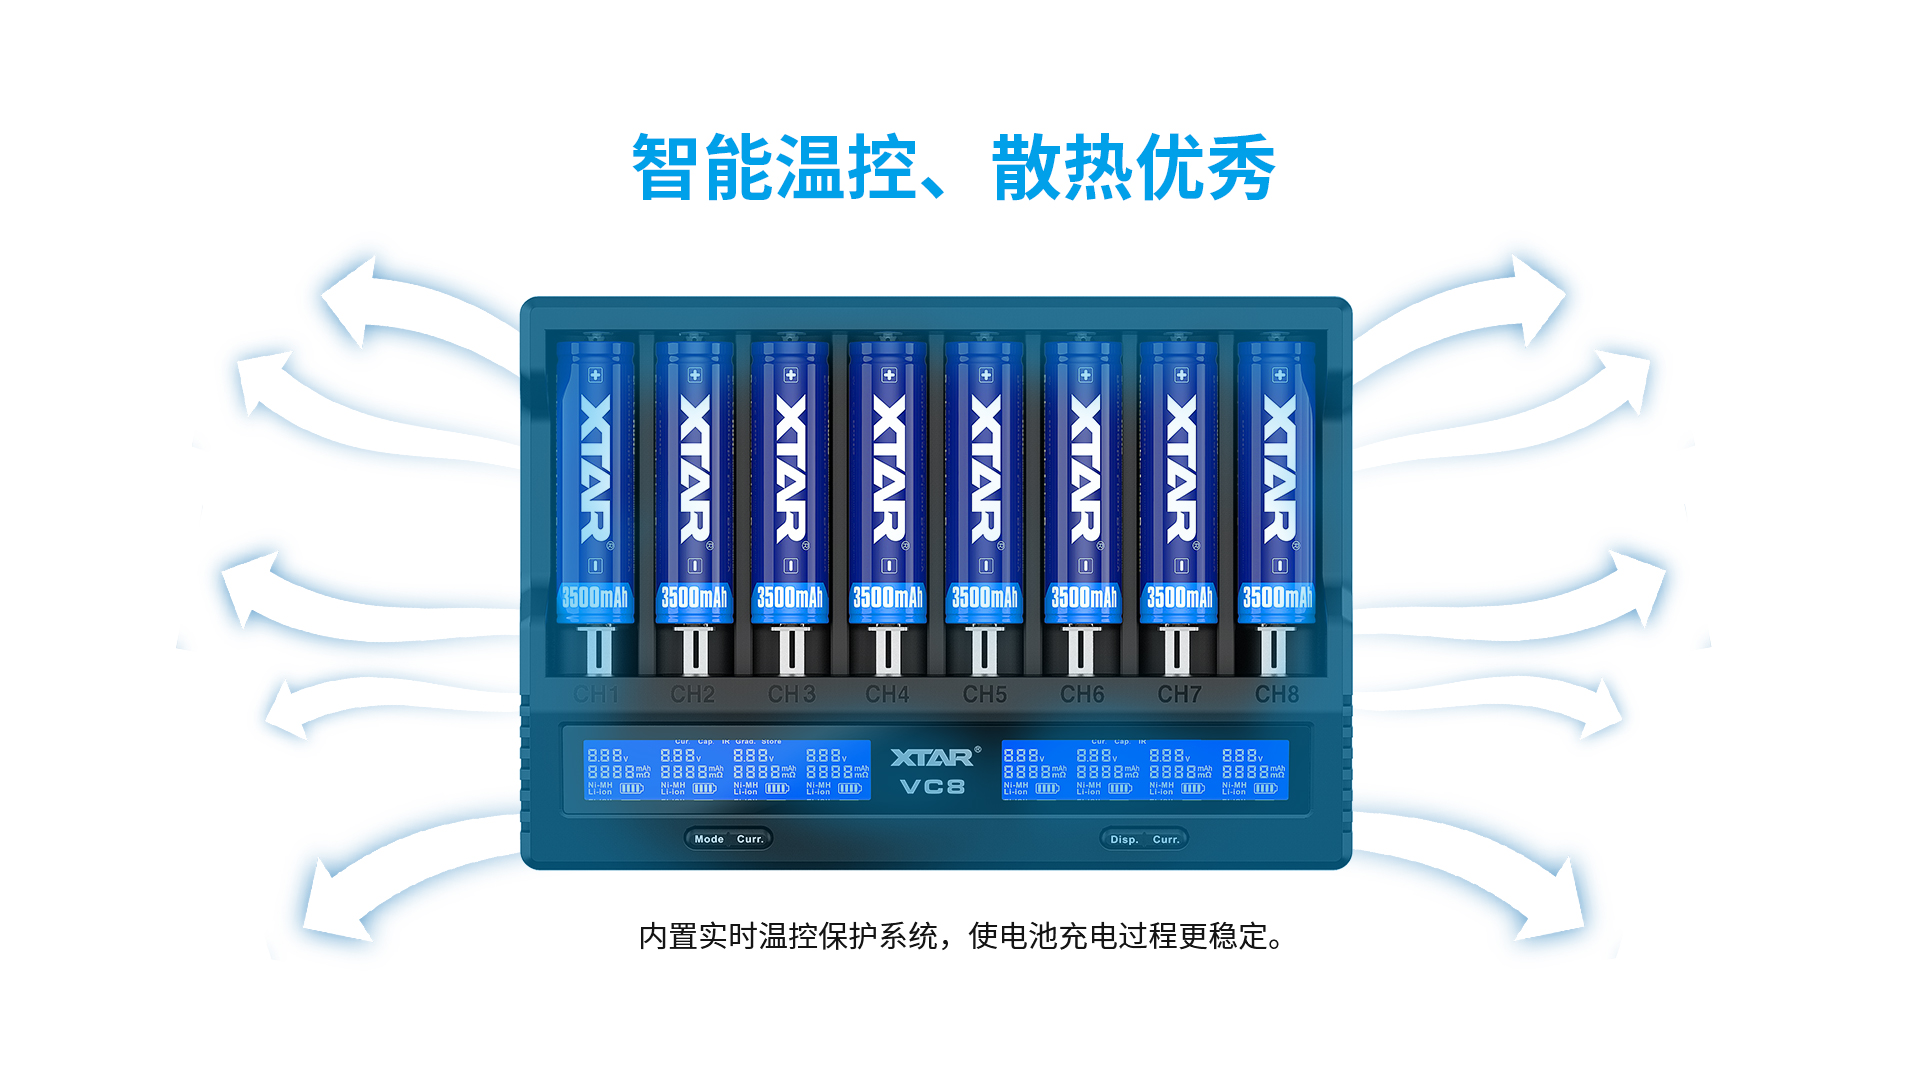 XTAR VC8 8槽智能充電器 21700 18650 鋰電池快速充電器 USB-C 修復電池 保護板可充